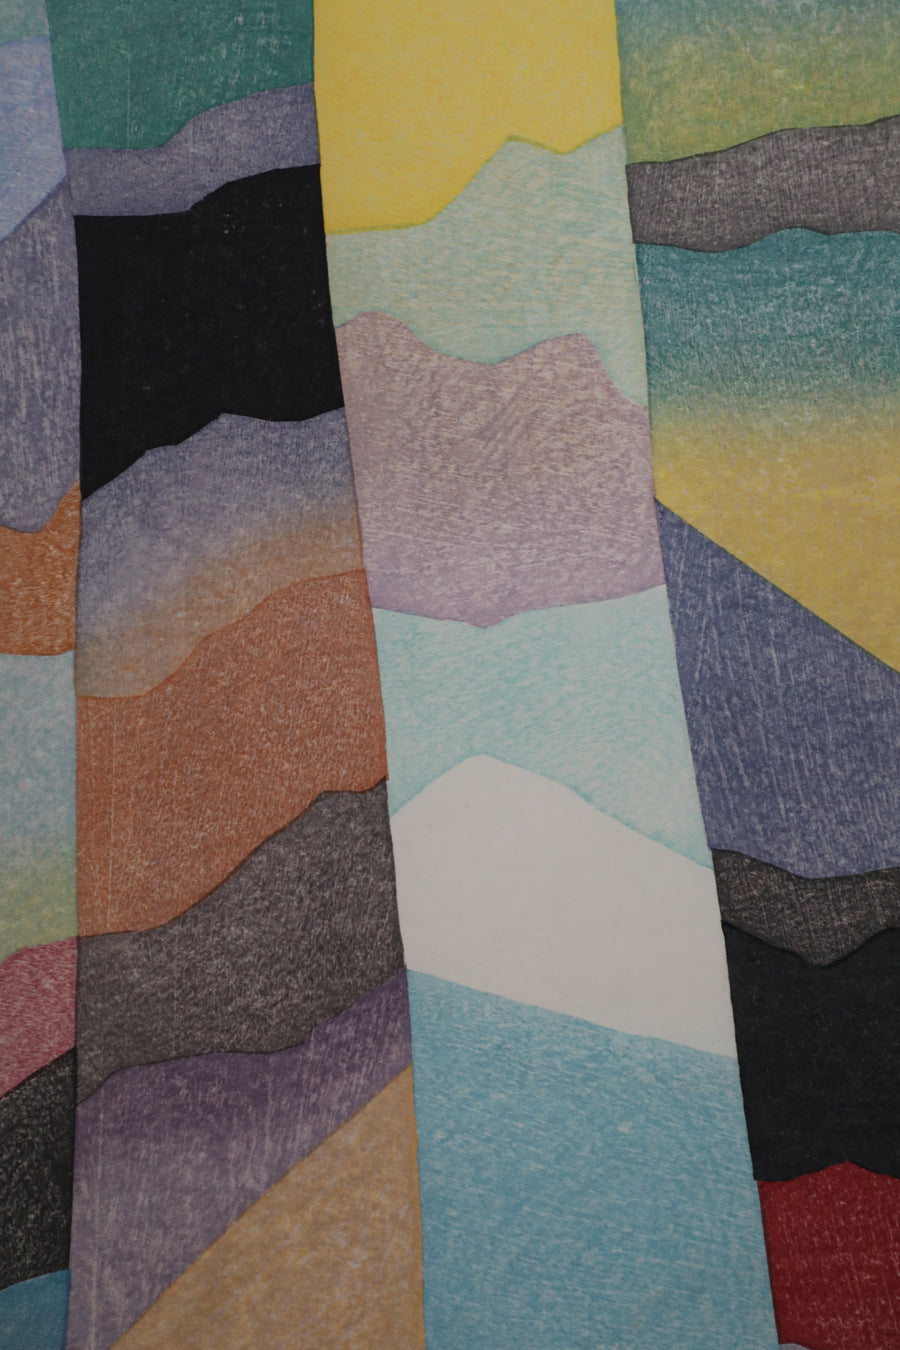 Ansei Uchima, Abstract Woodblock Print (1981)